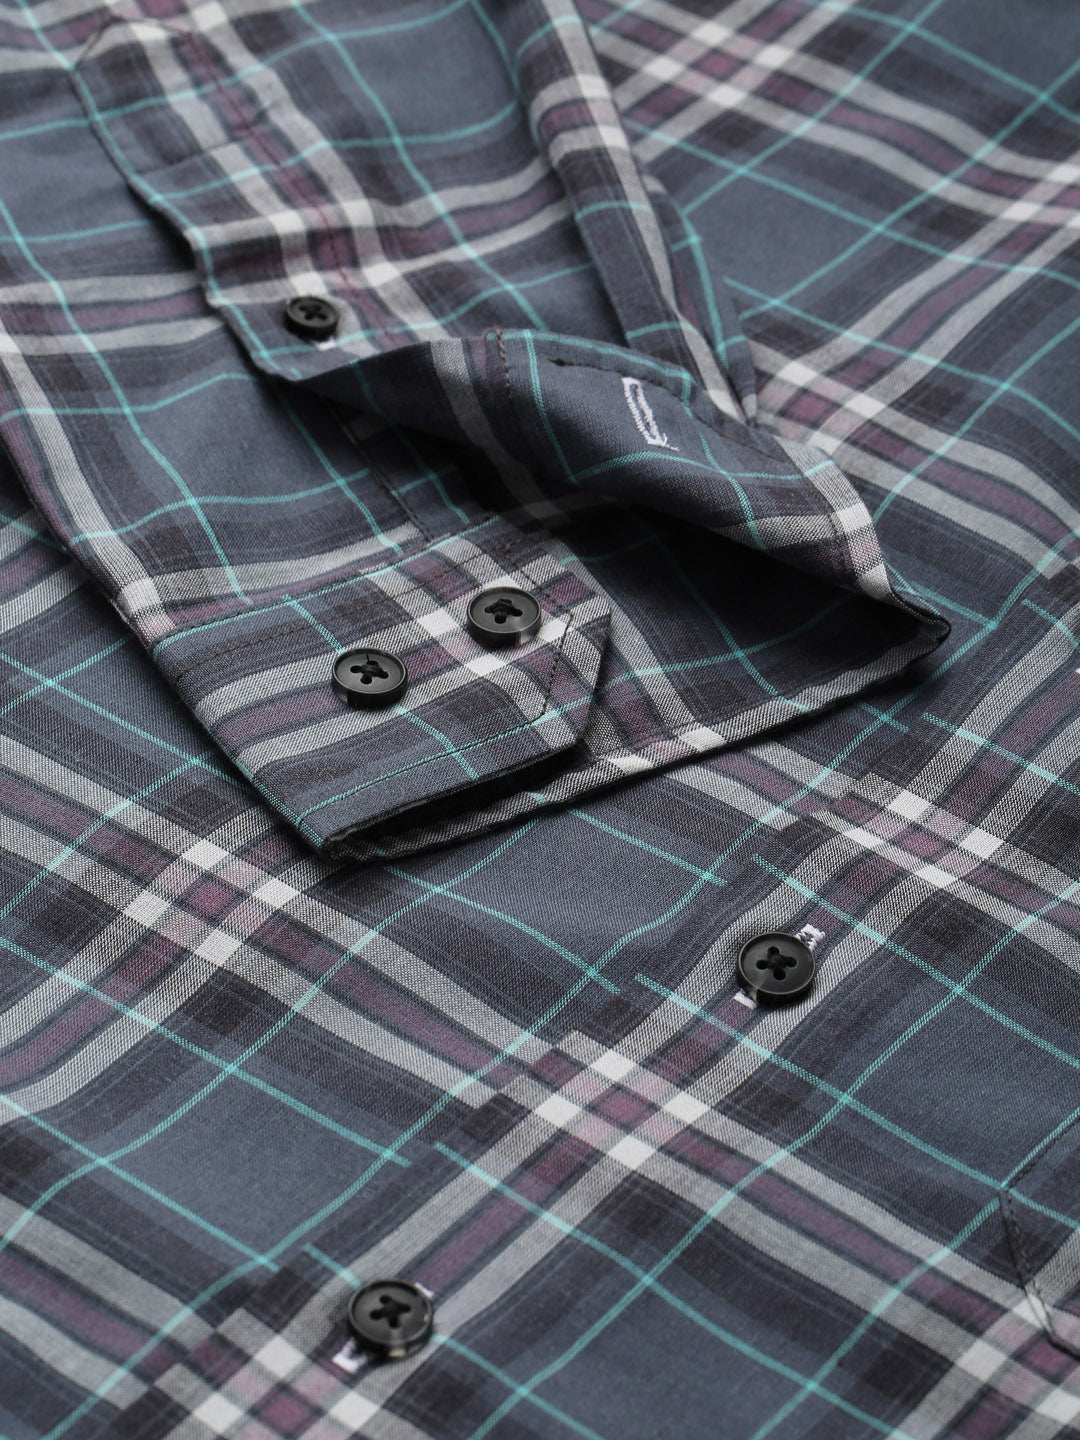 Don Vino Classic Grey Checks Printed Shirt For Men